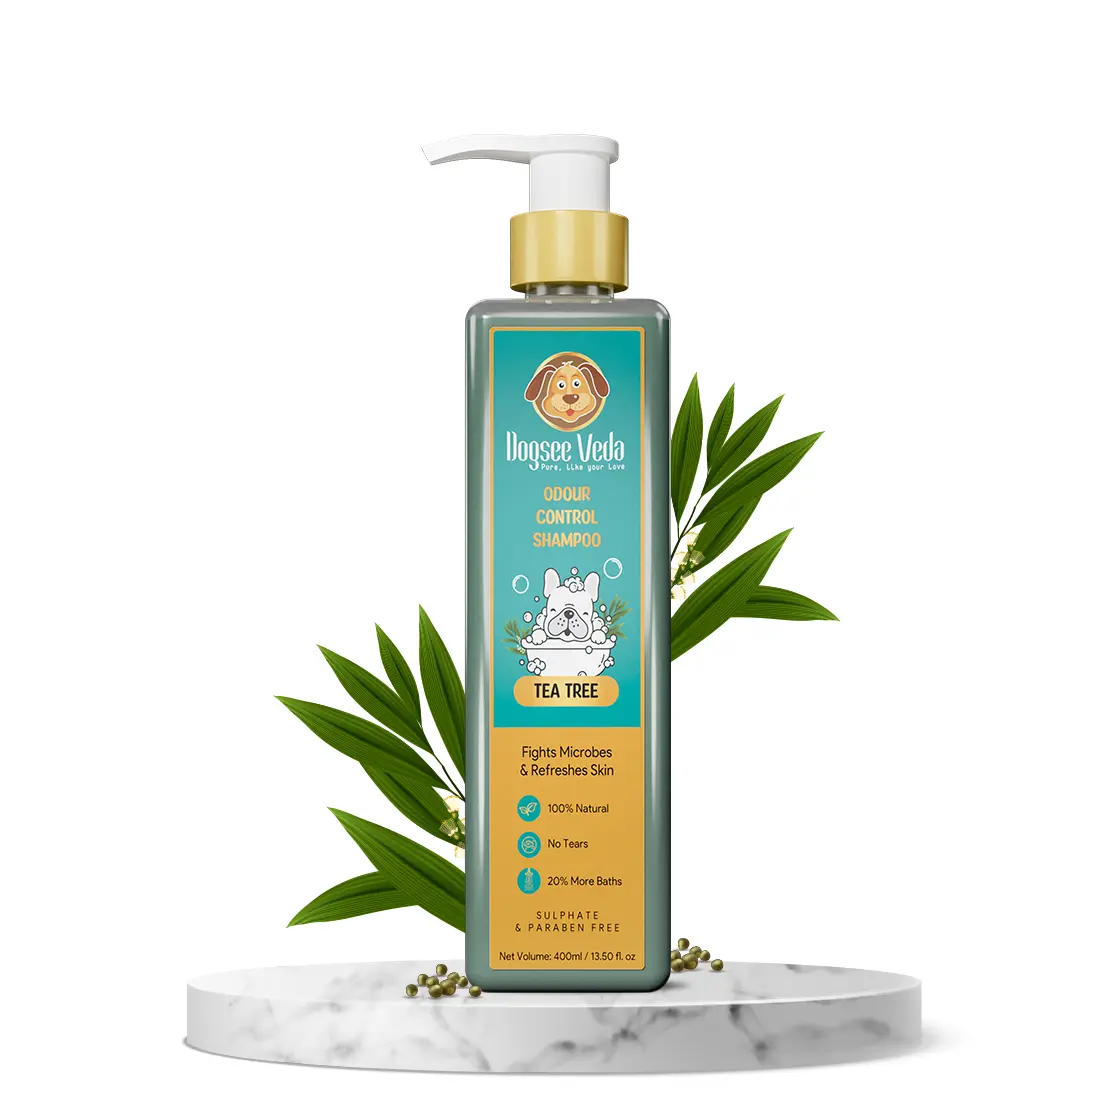 Dogsee Veda Tea Tree: Odour Control Dog Shampoo